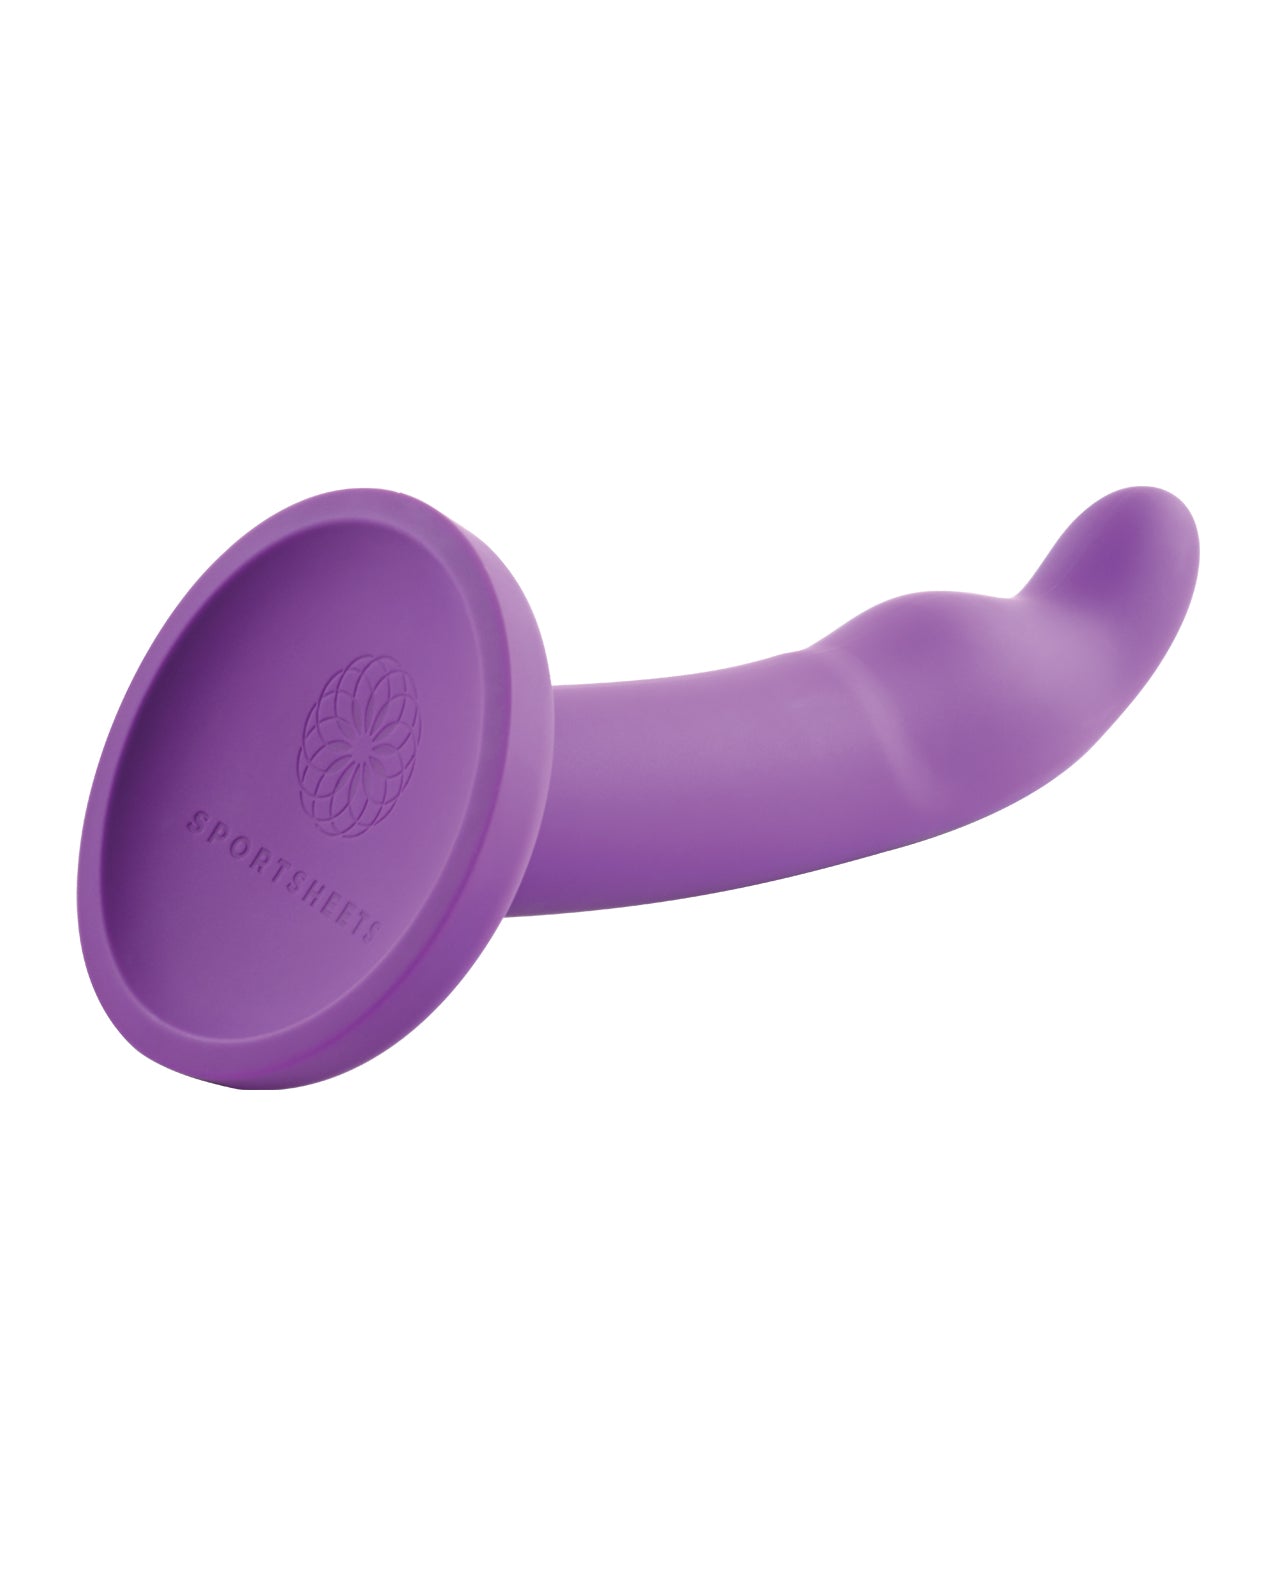 Sportsheets Astil 8" Silicone G Spot Dildo - Purple